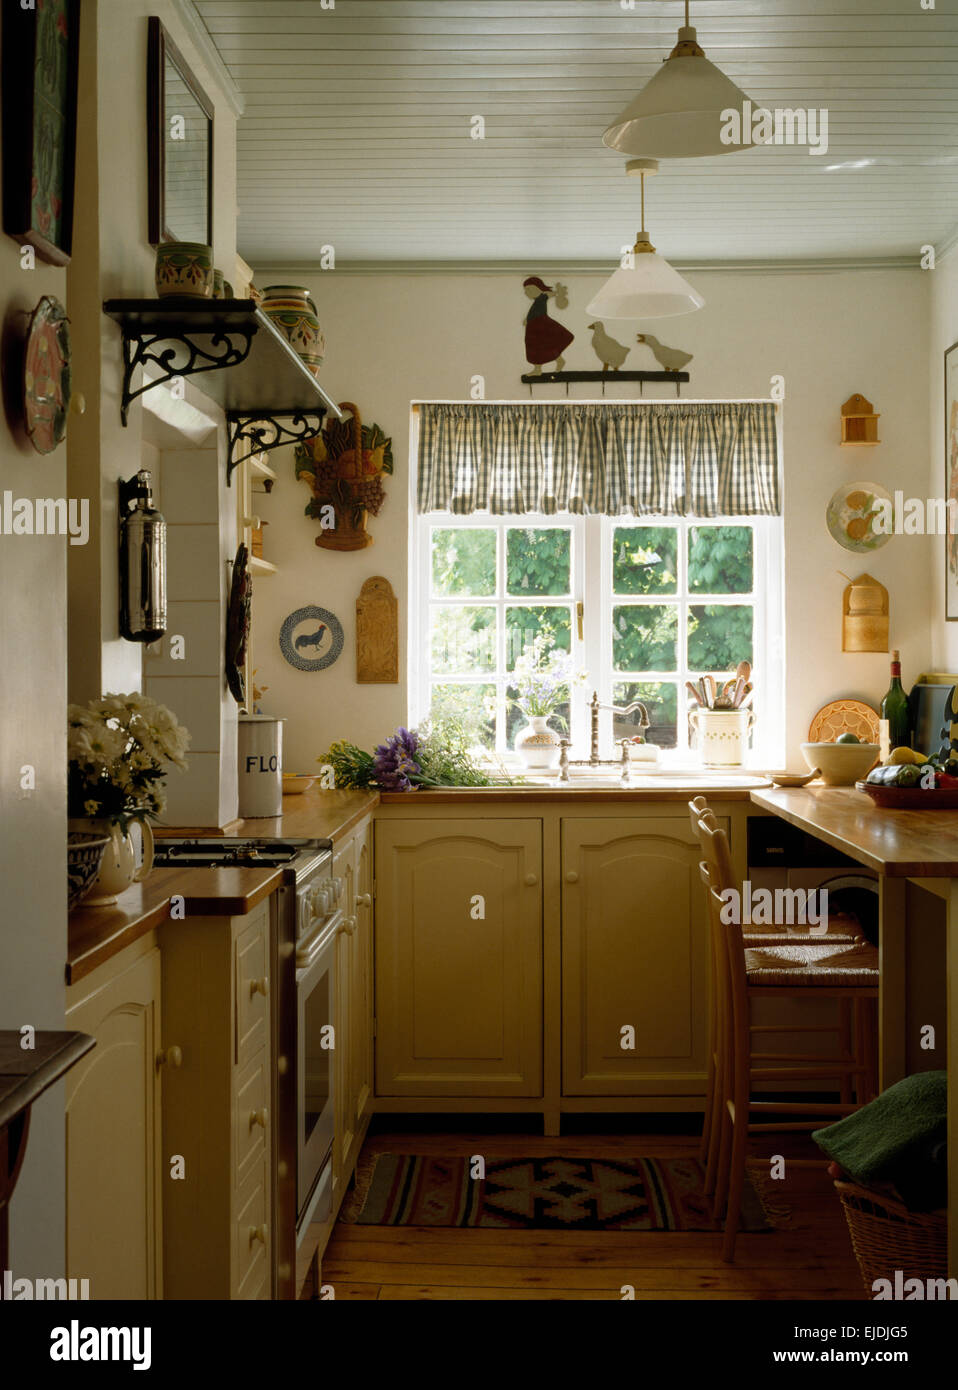 Gingham pelmet on window in nineties cottage kitchen Stock Photo